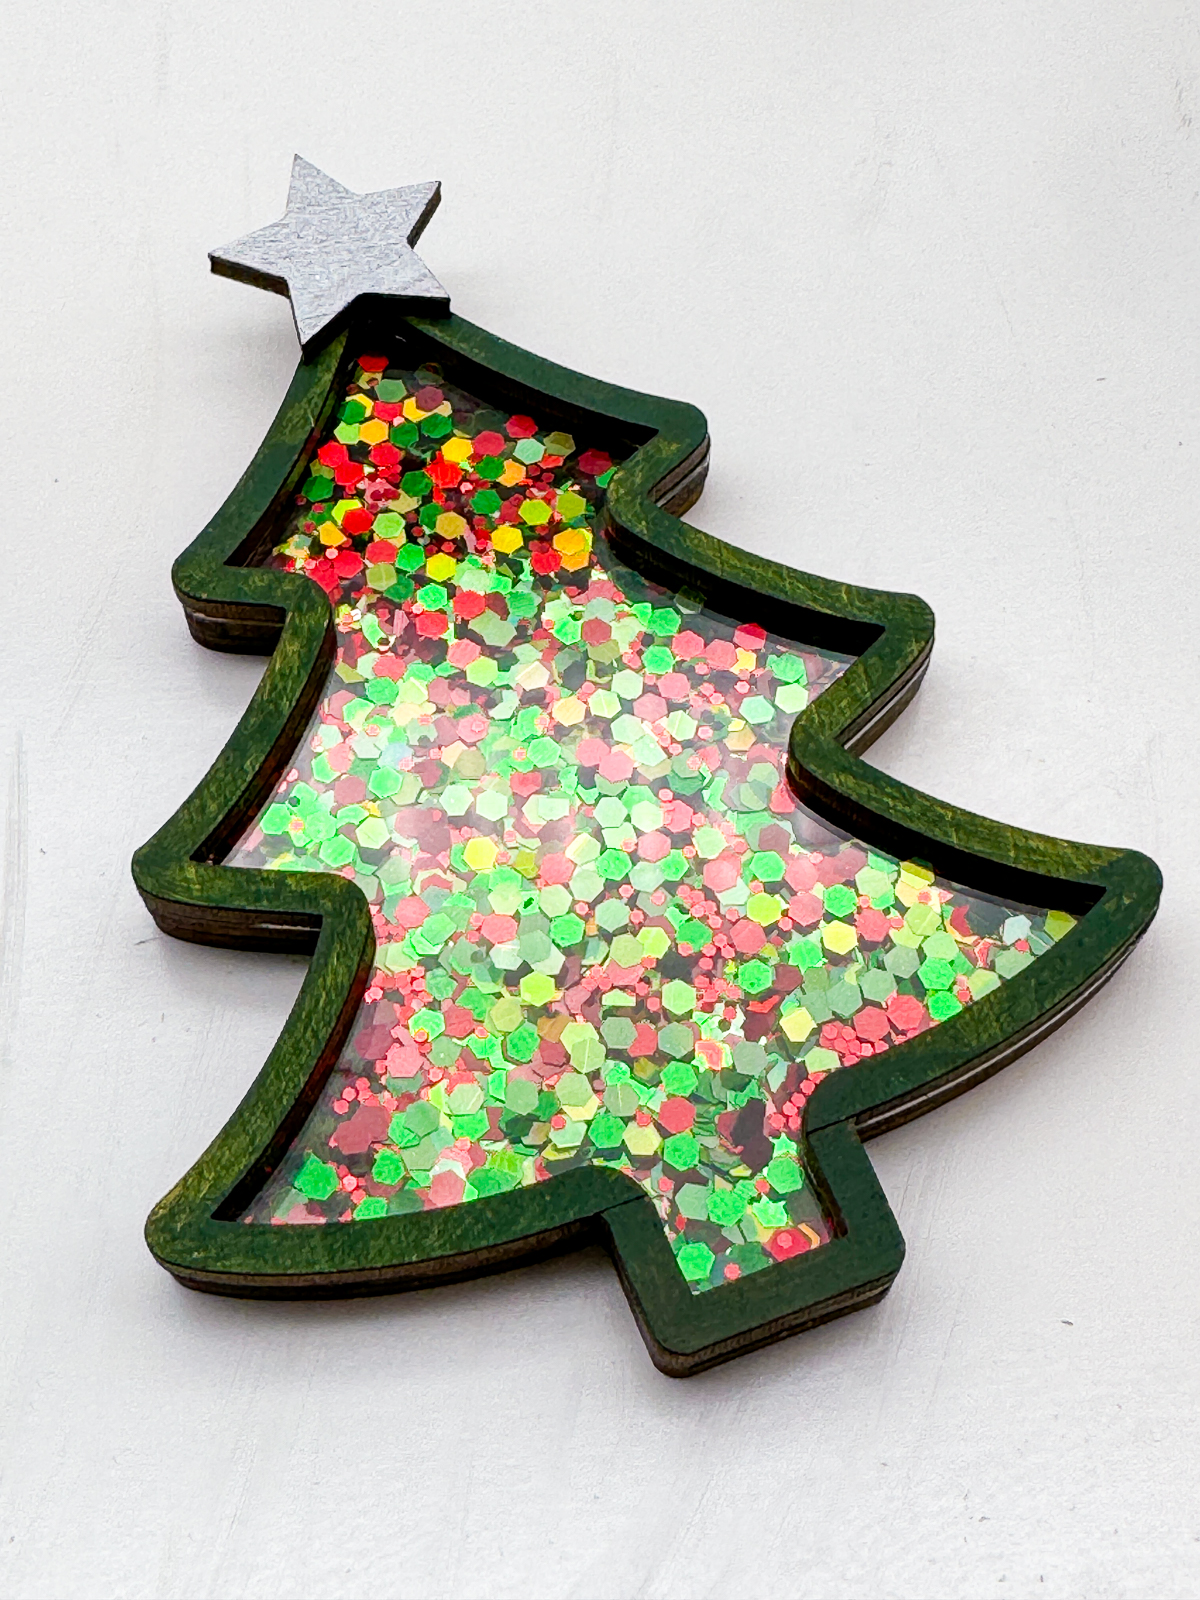 DIY glitter ornament in a Christmas tree shape